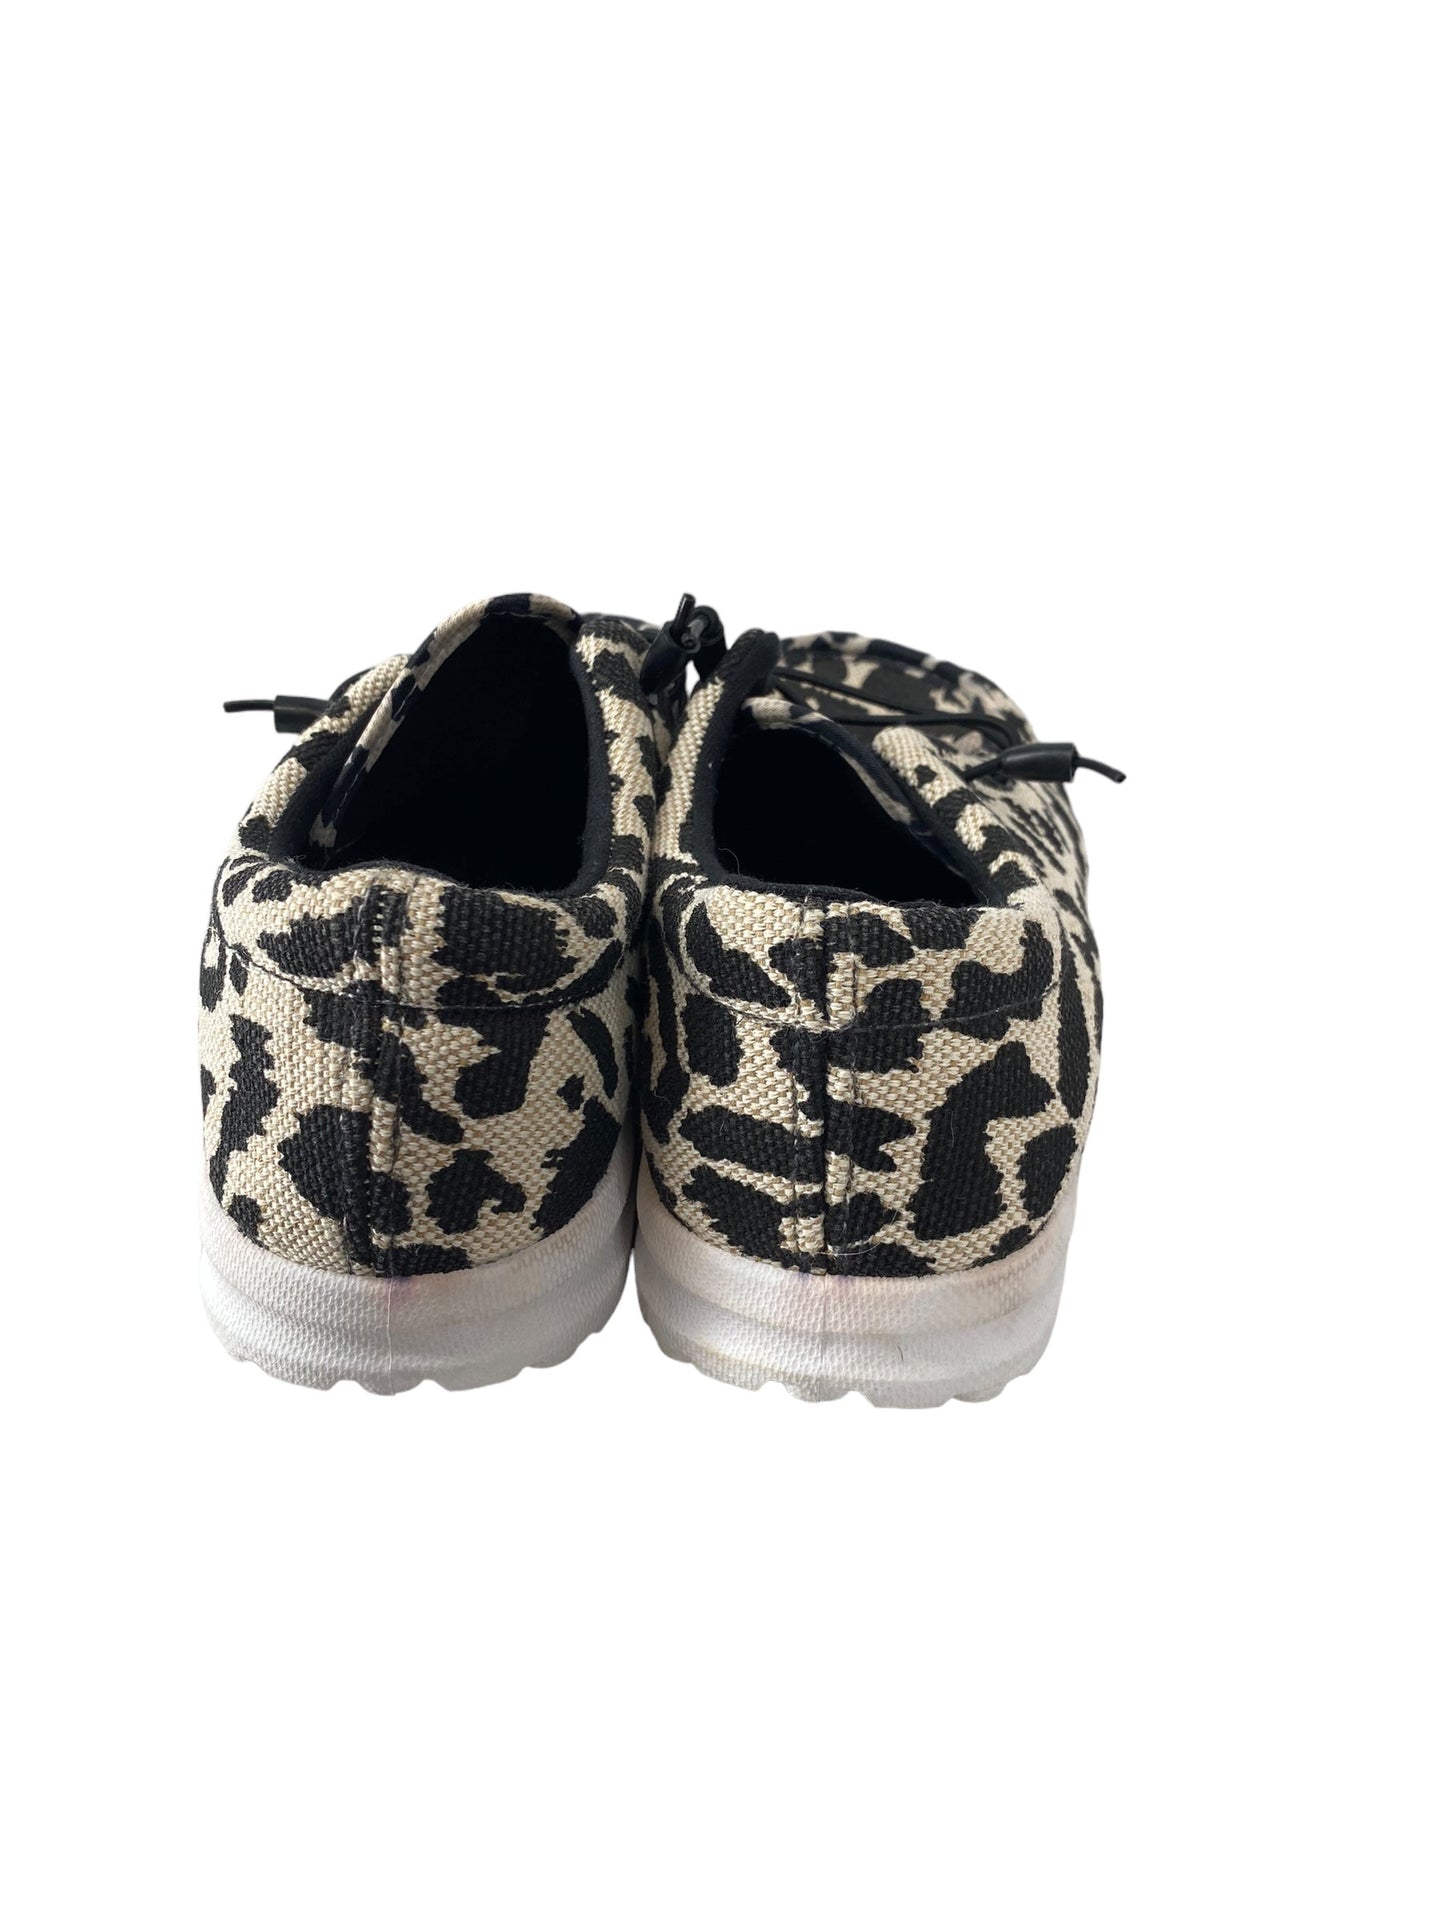 Animal Print Shoes Flats Yoki, Size 8.5